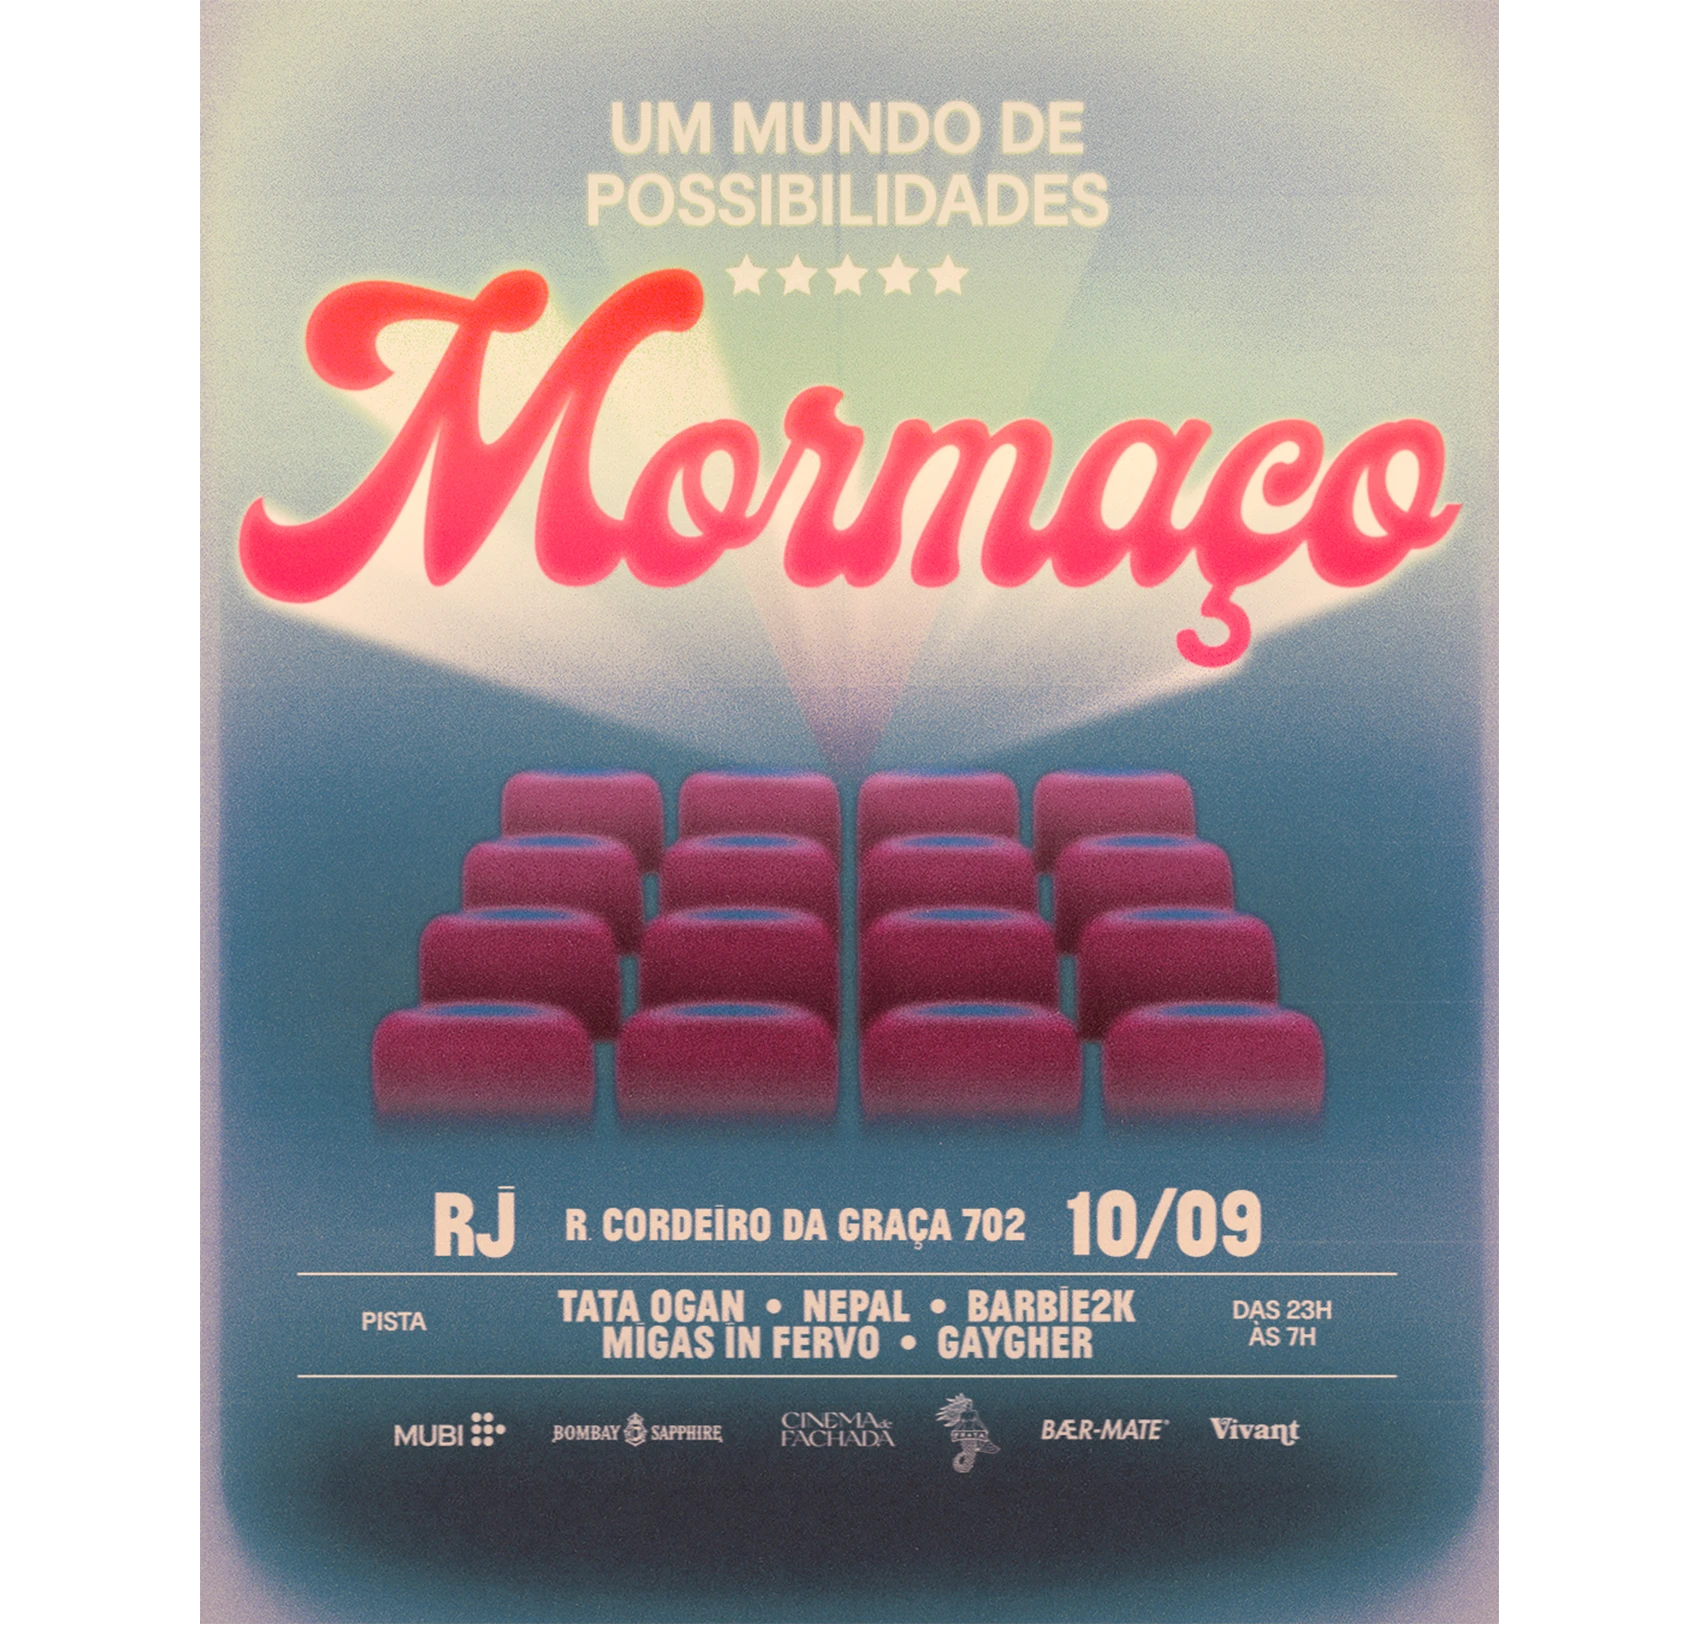 Cine Mormaço